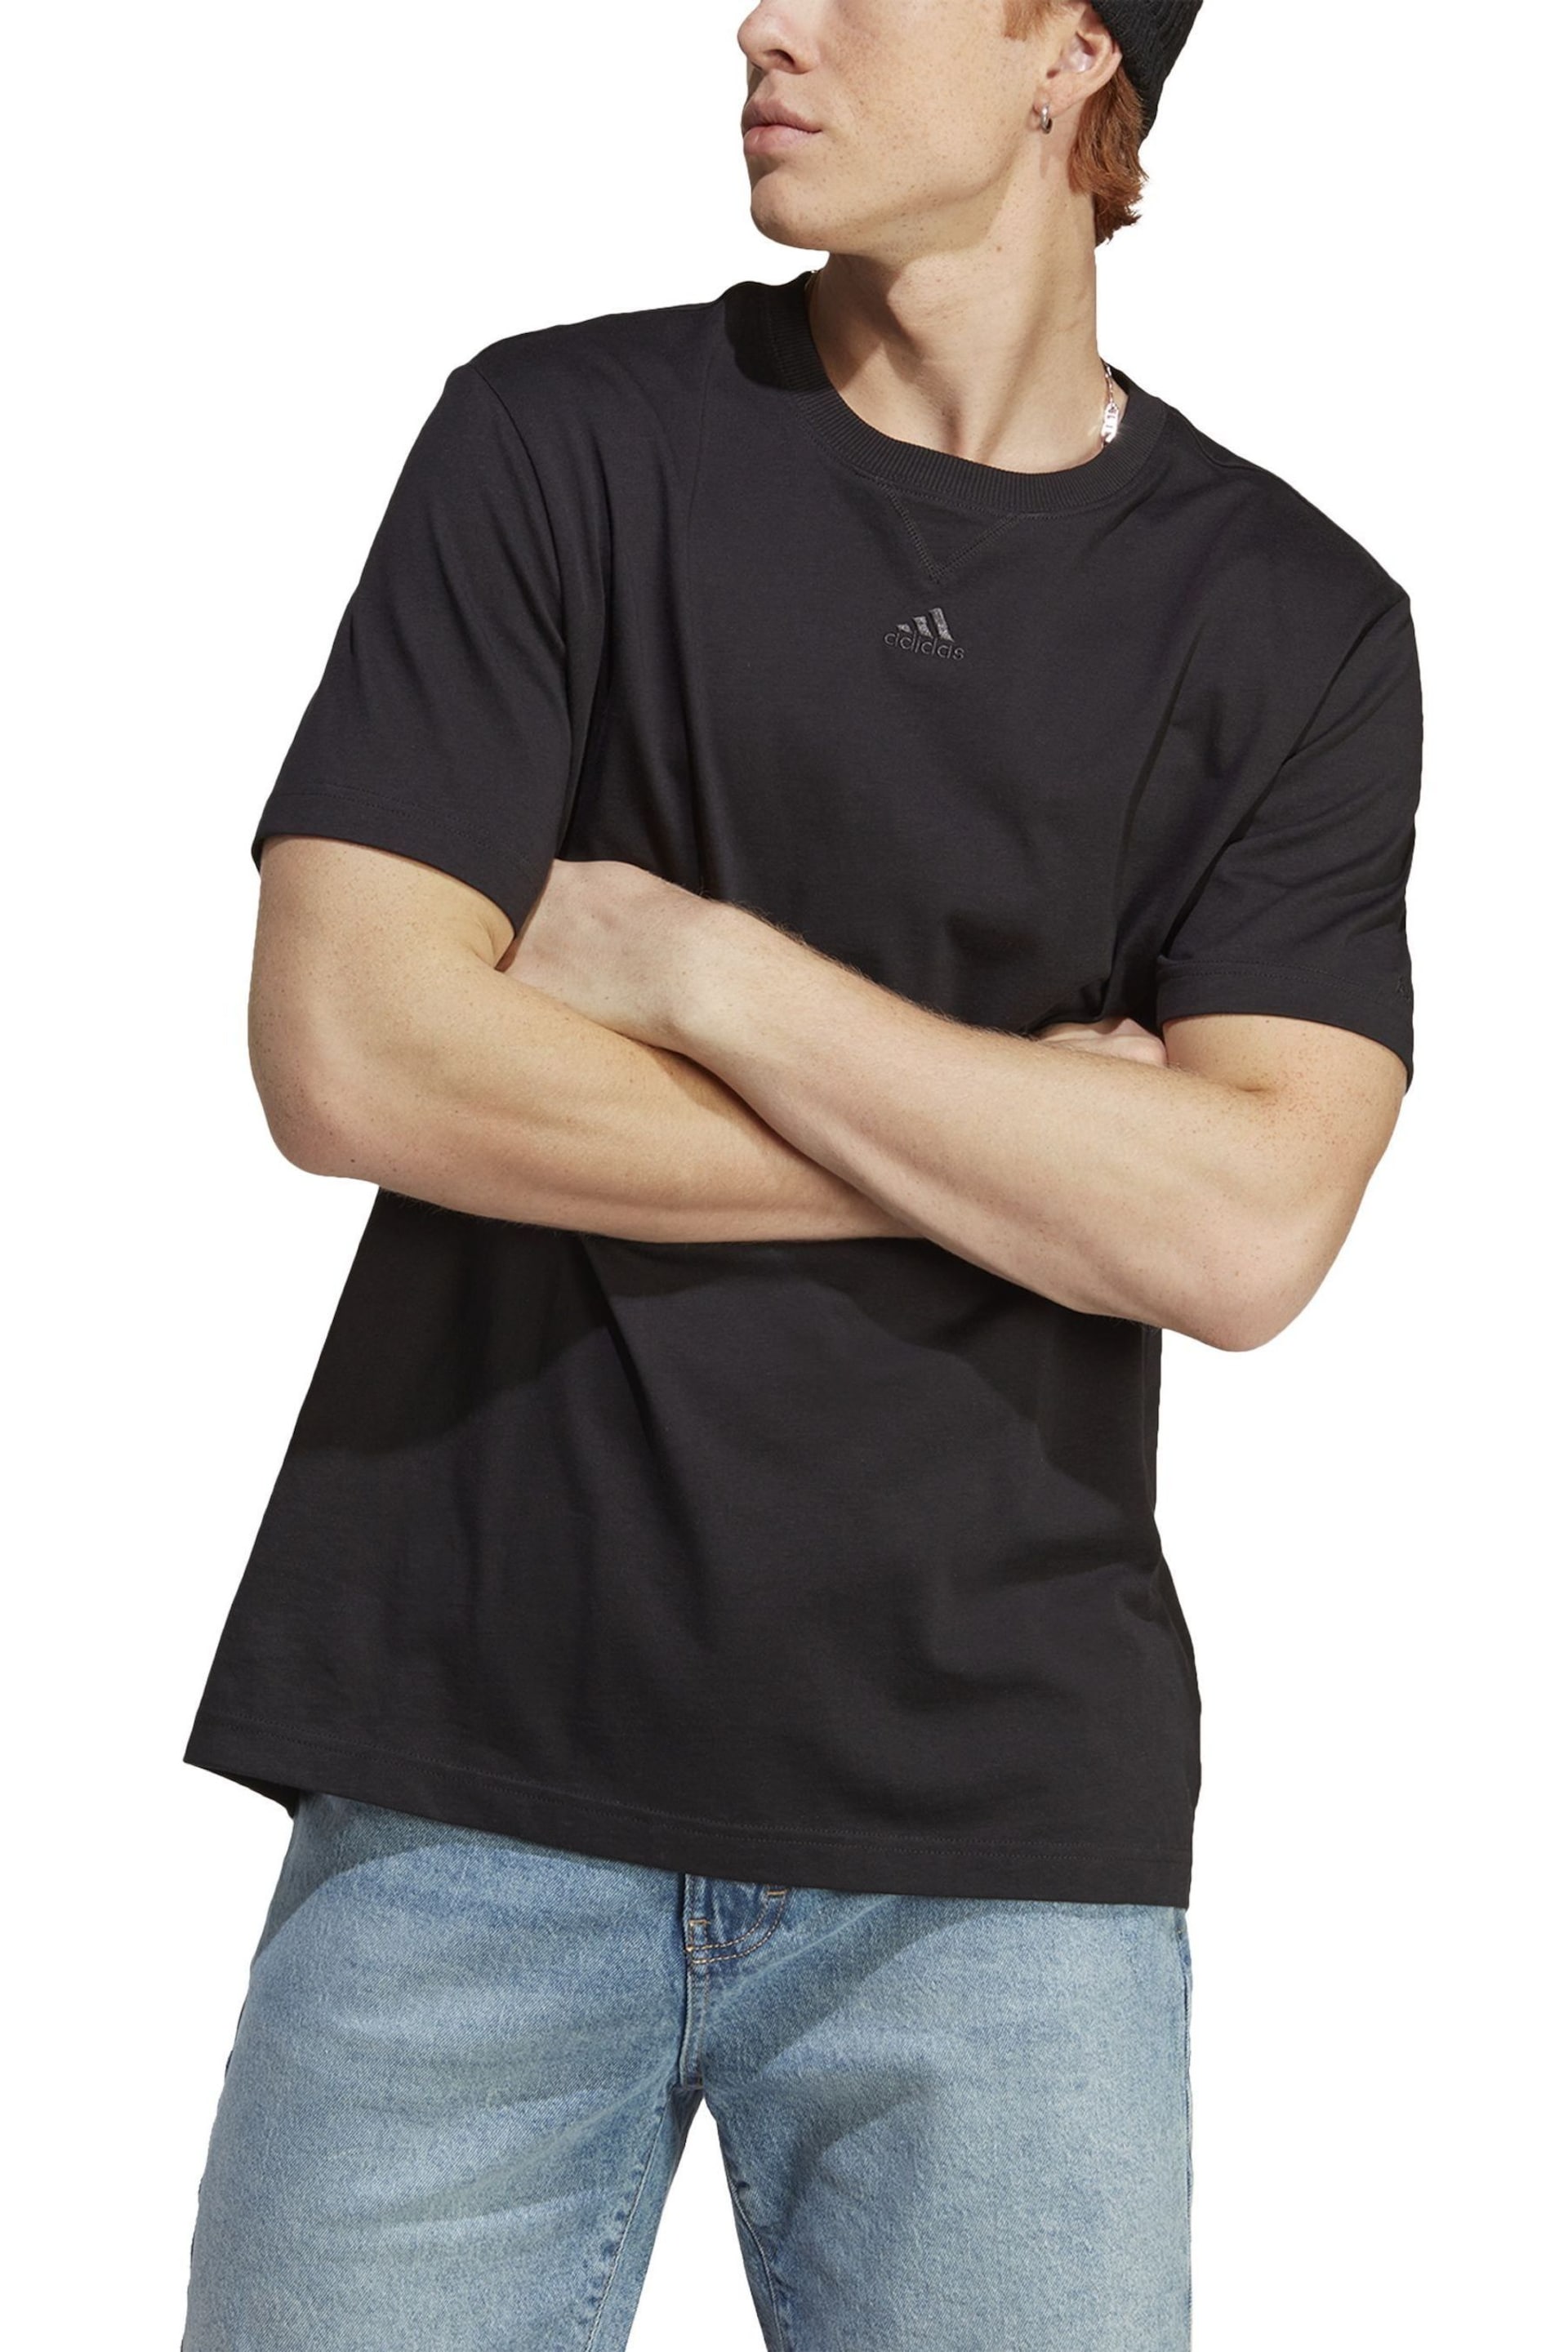 adidas Black Sportswear All SZN T-Shirt - Image 7 of 11